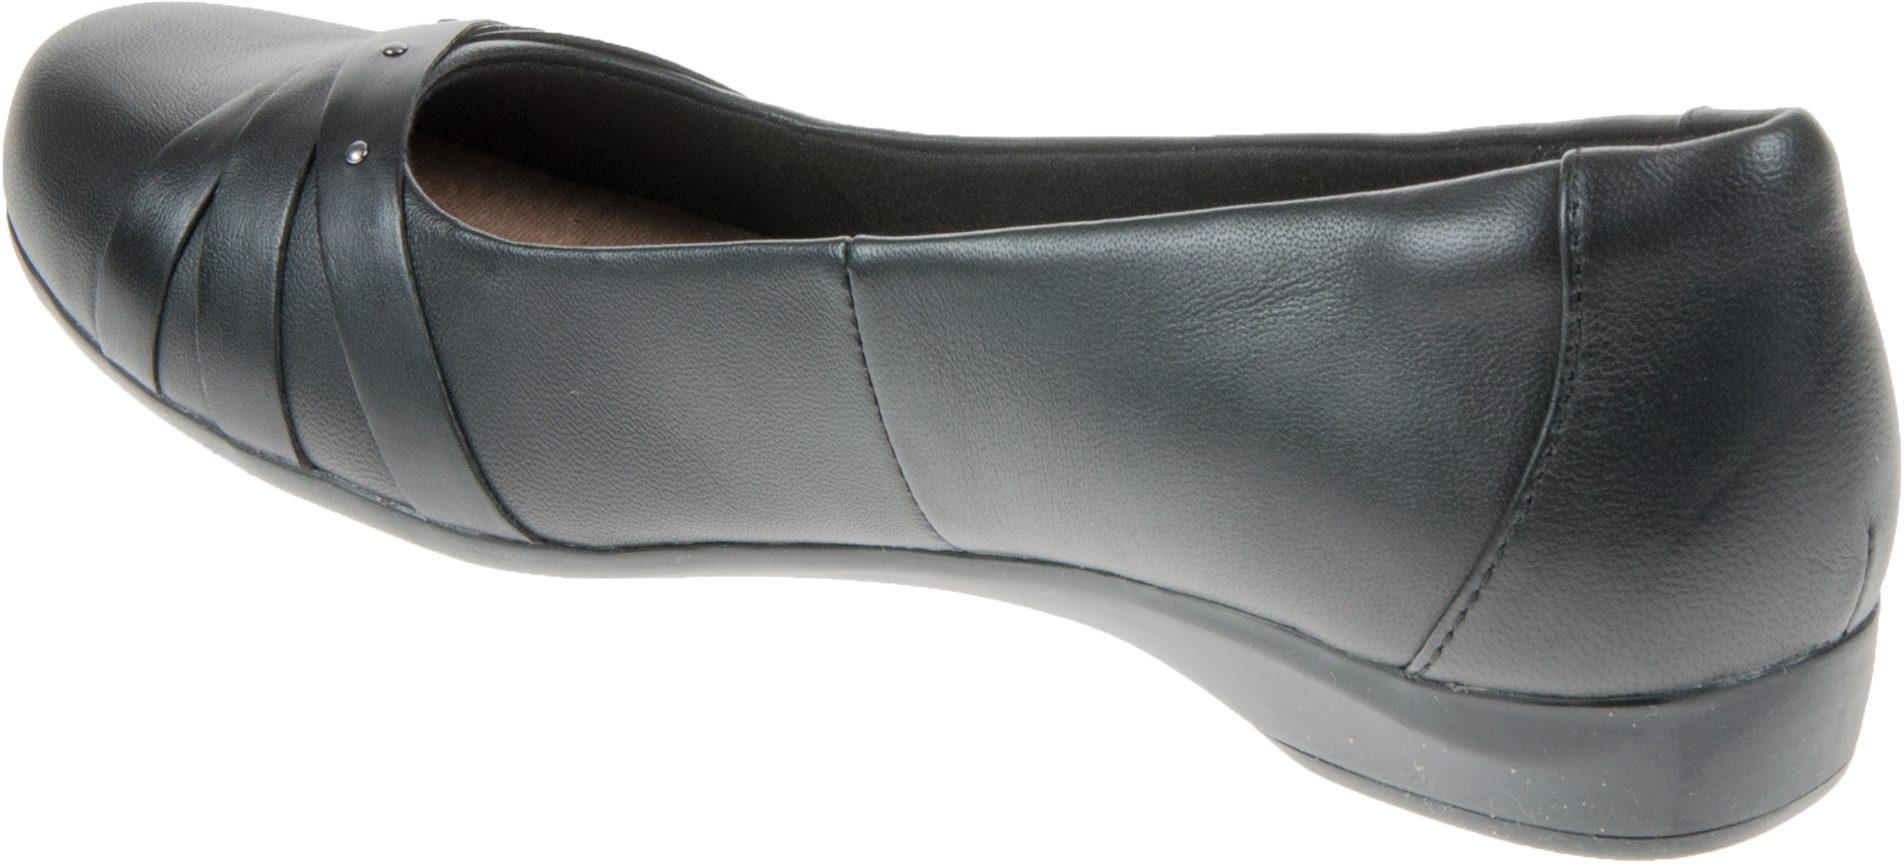 Clarks Kinzie Nadia Black Leather 26128603 - Ballerina Shoes ...